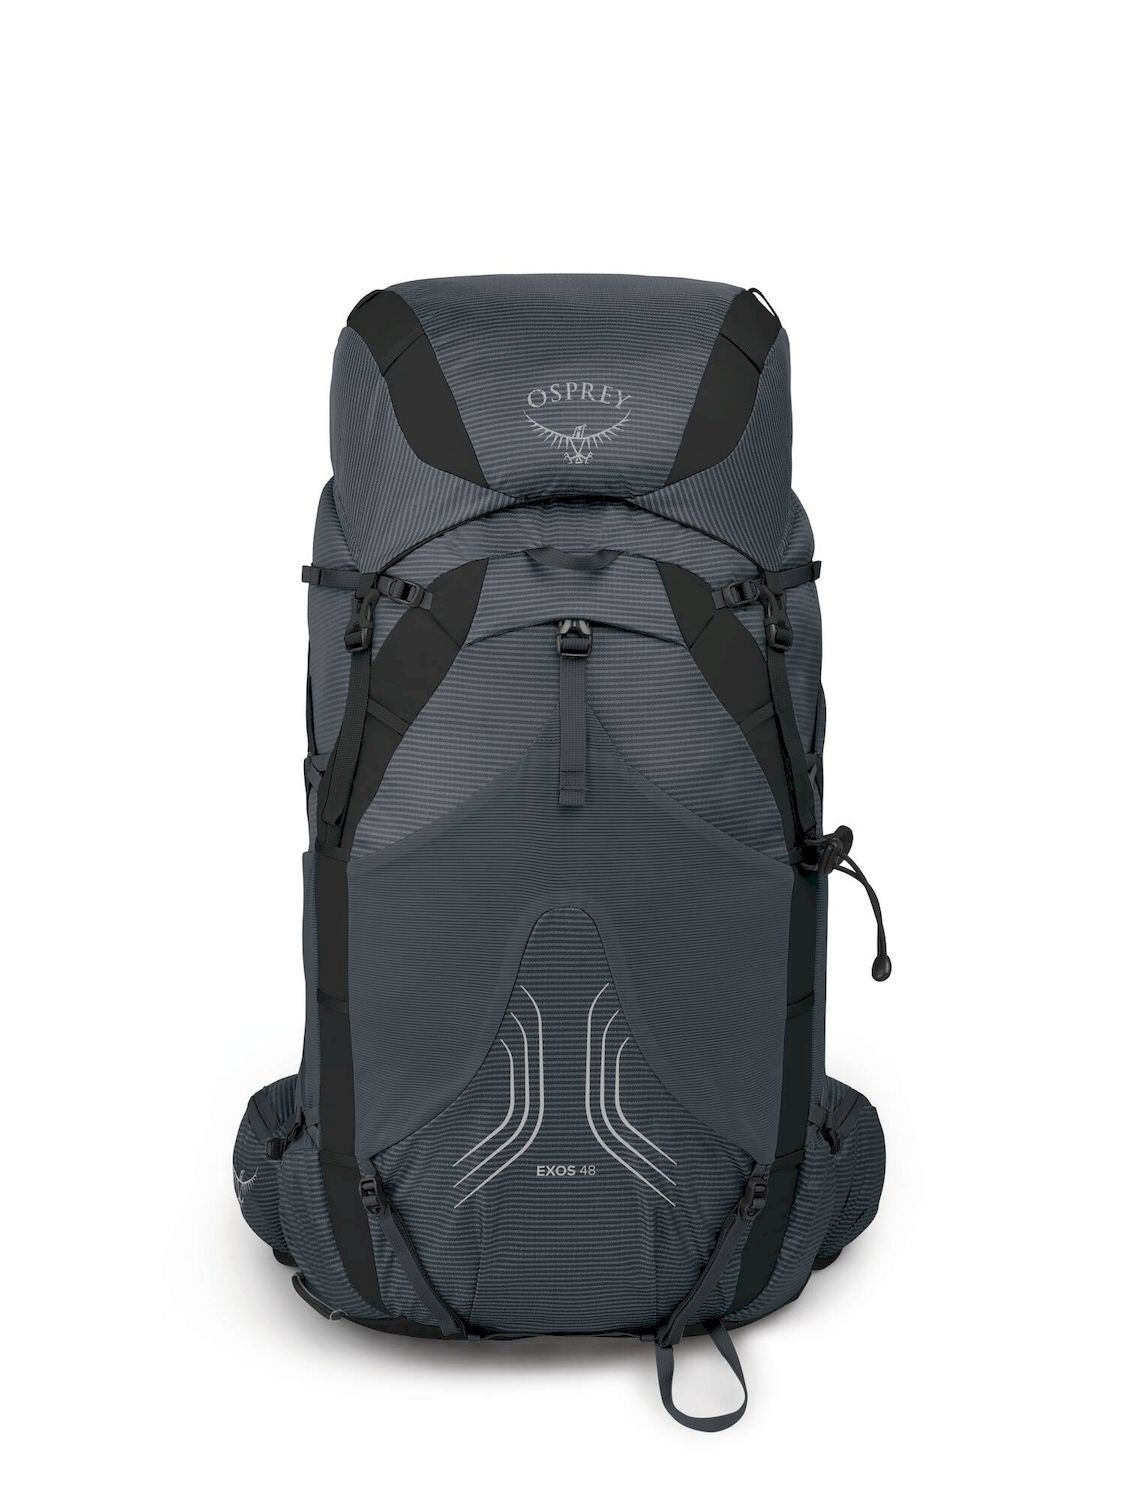 Osprey Exos 48 - Hiking backpack - Men's